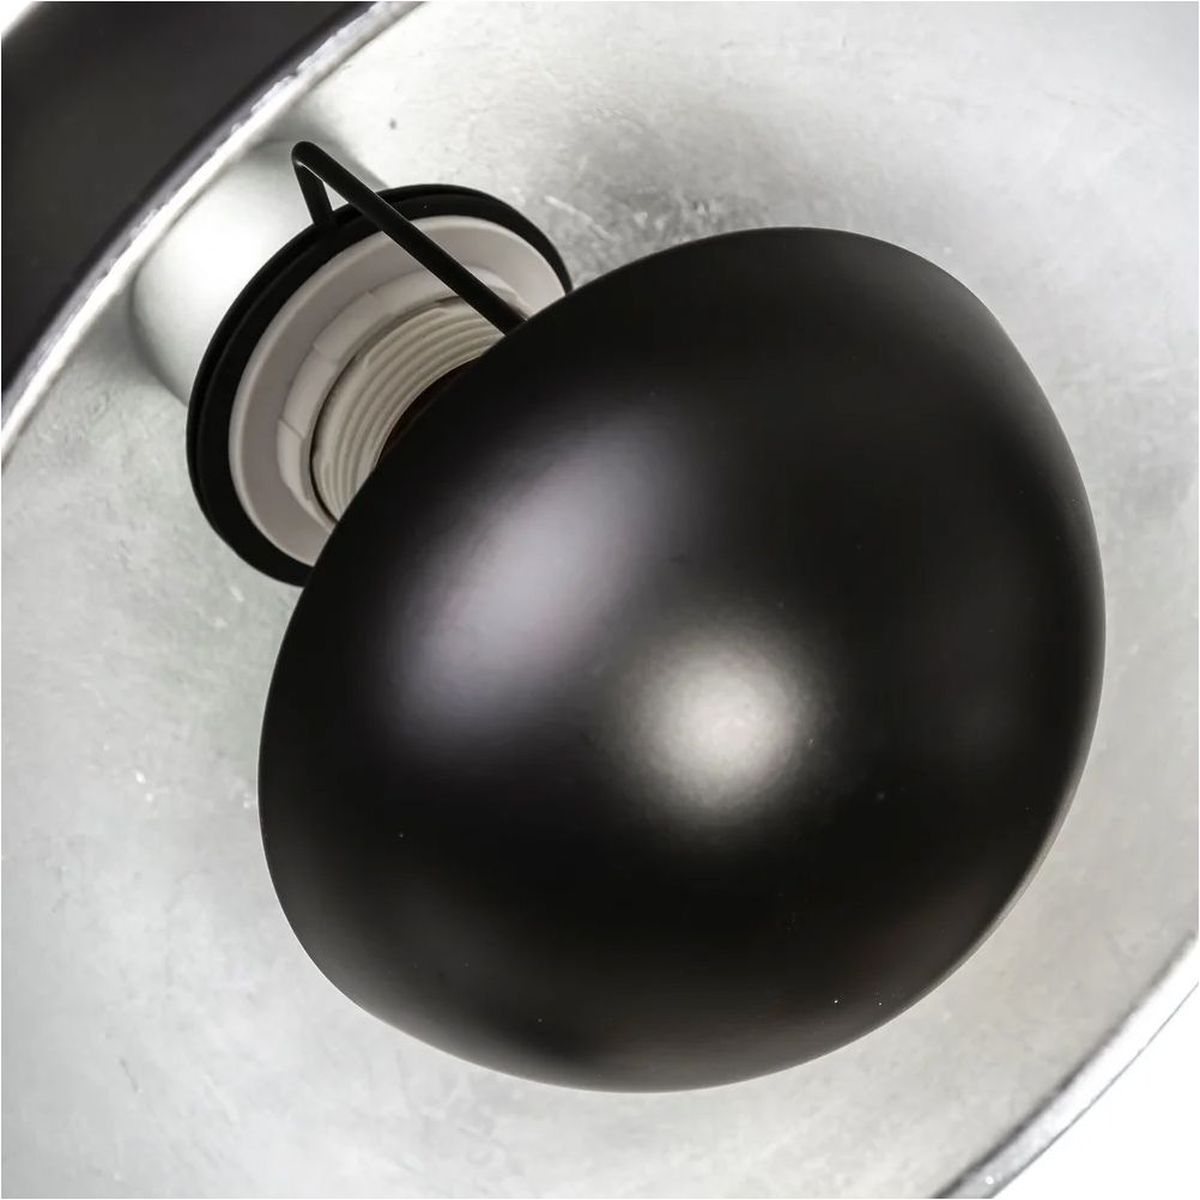 Retro Steel Table Lamp - Black